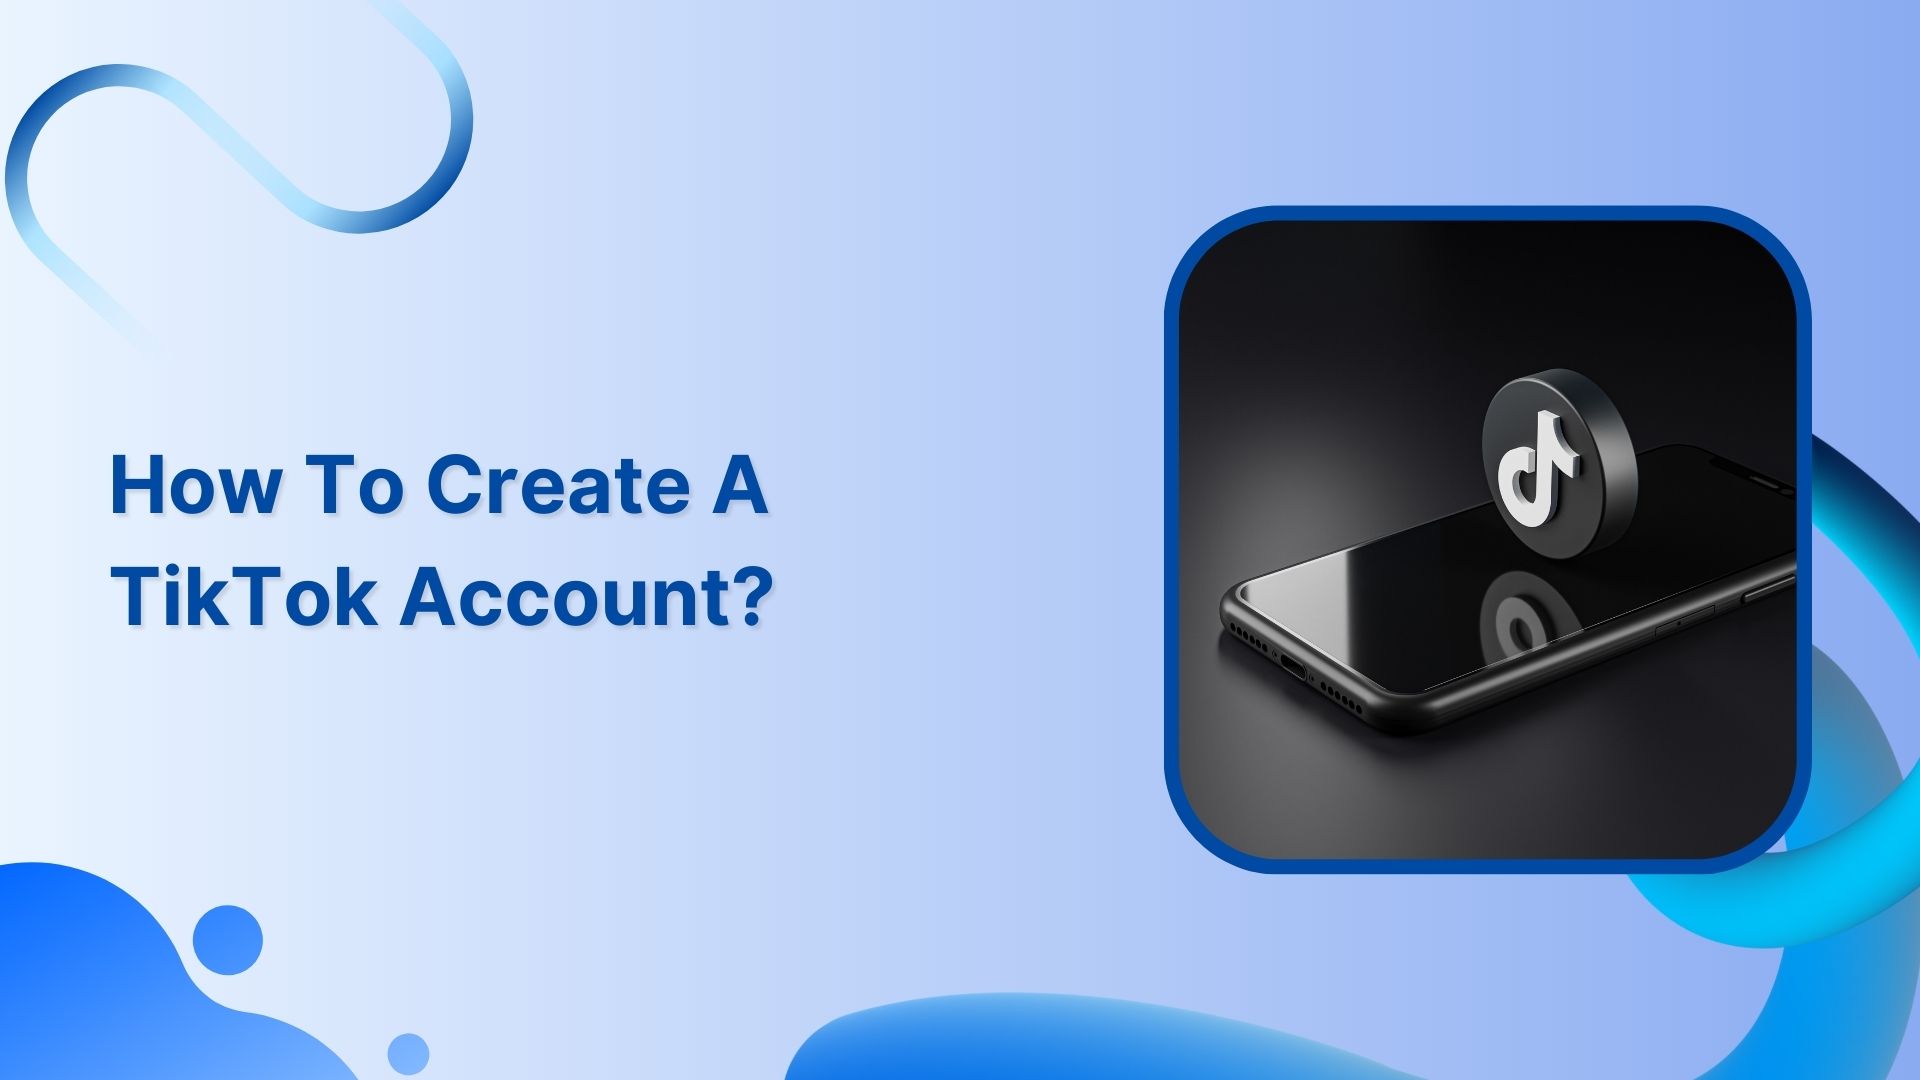 How to create a TikTok account?